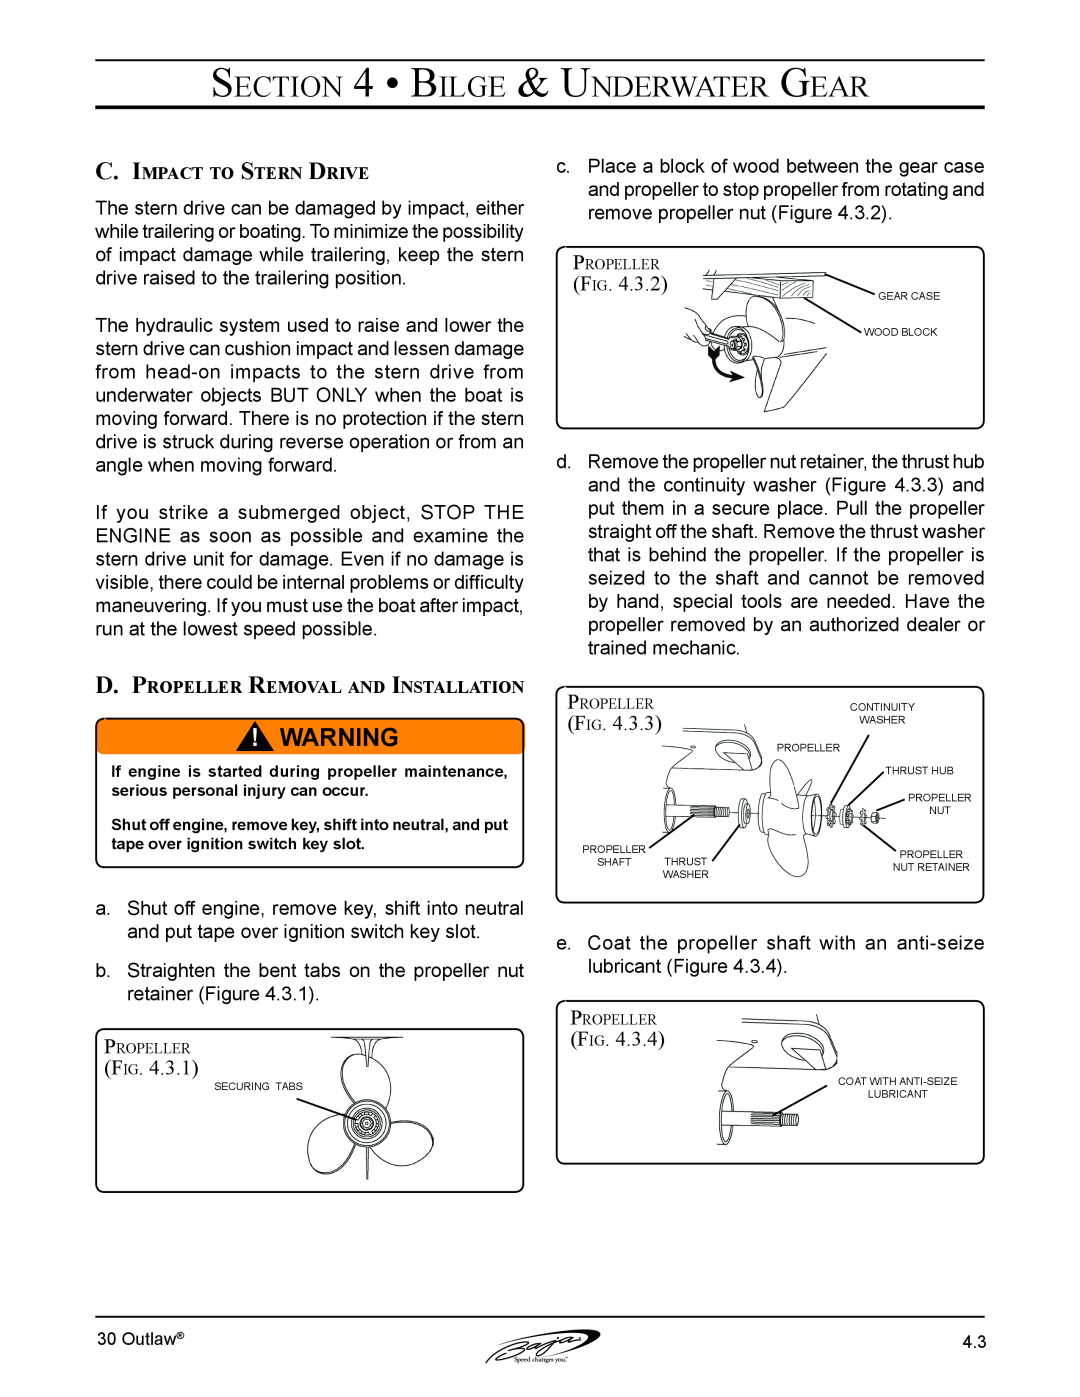 Baja Marine 30 manual Bilge & Underwater Gear, b. Straighten the bent tabs on the propeller nut retainer Figure 